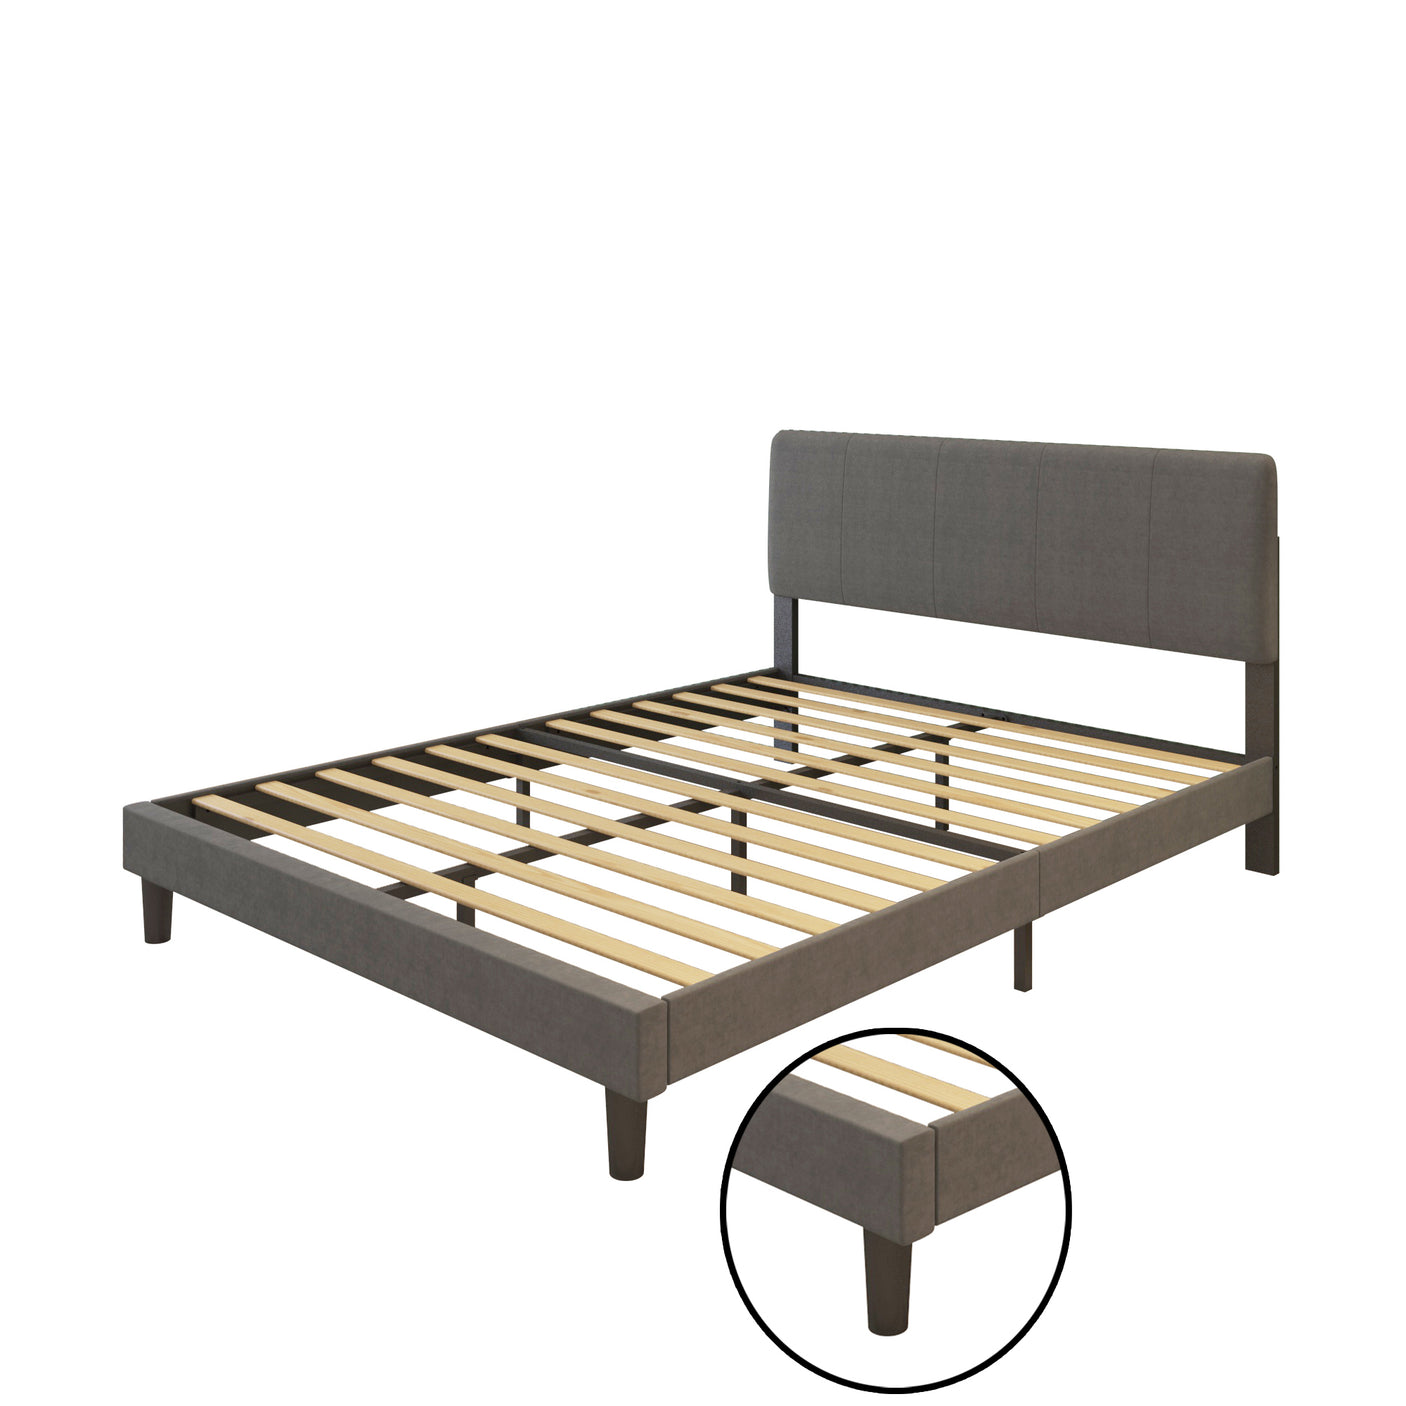 TWIN Upholstered Headboard Platform Bed Frame ,With wood Slat Support,  Easy Assembly,  Dark Grey - Home Elegance USA